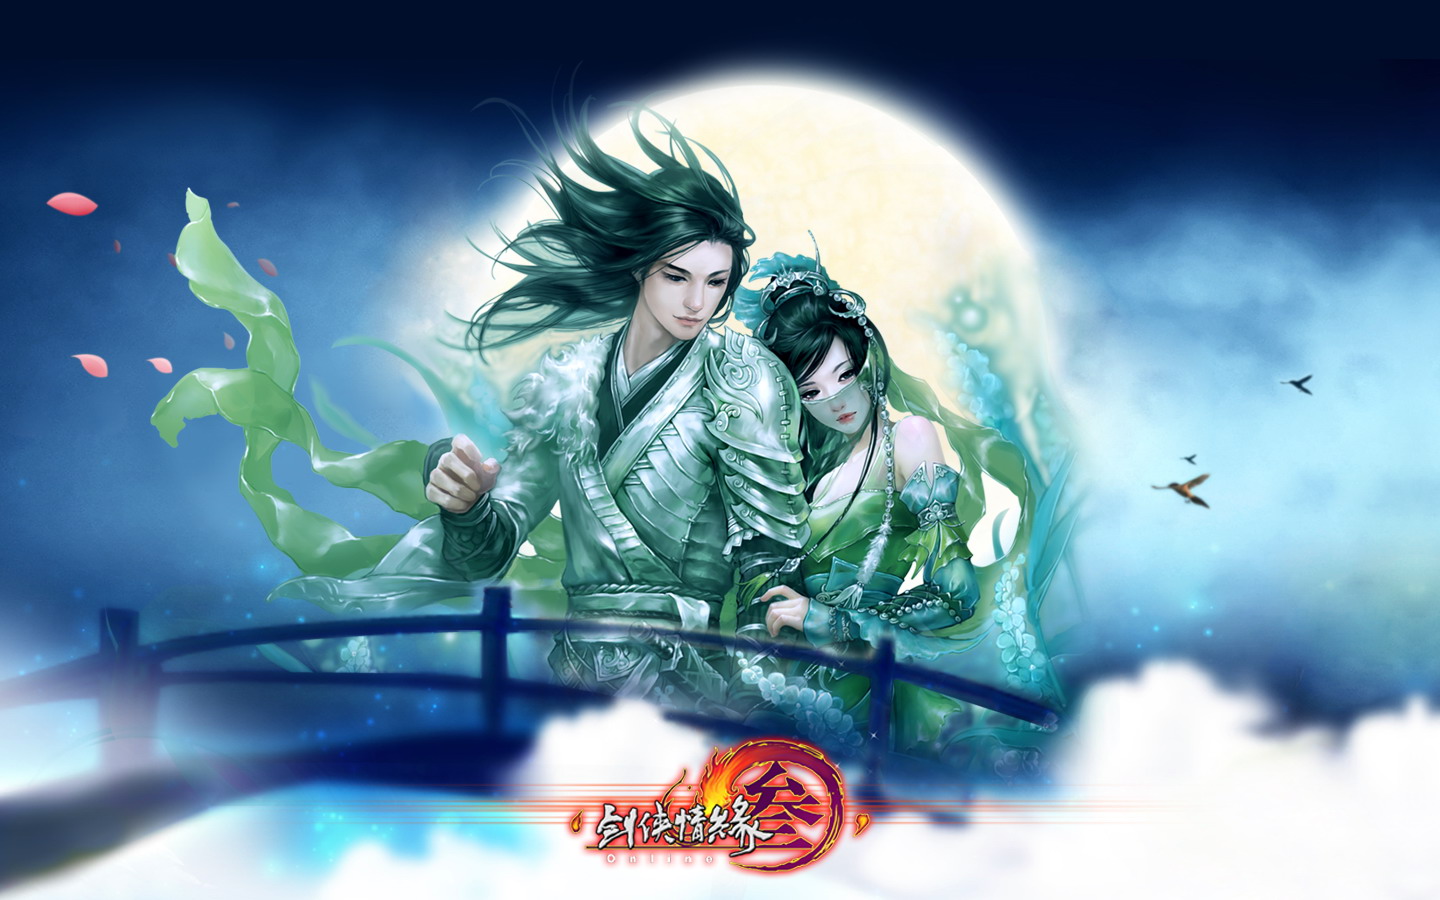 D martial arts online game wallpaper of JX 30229 - Games